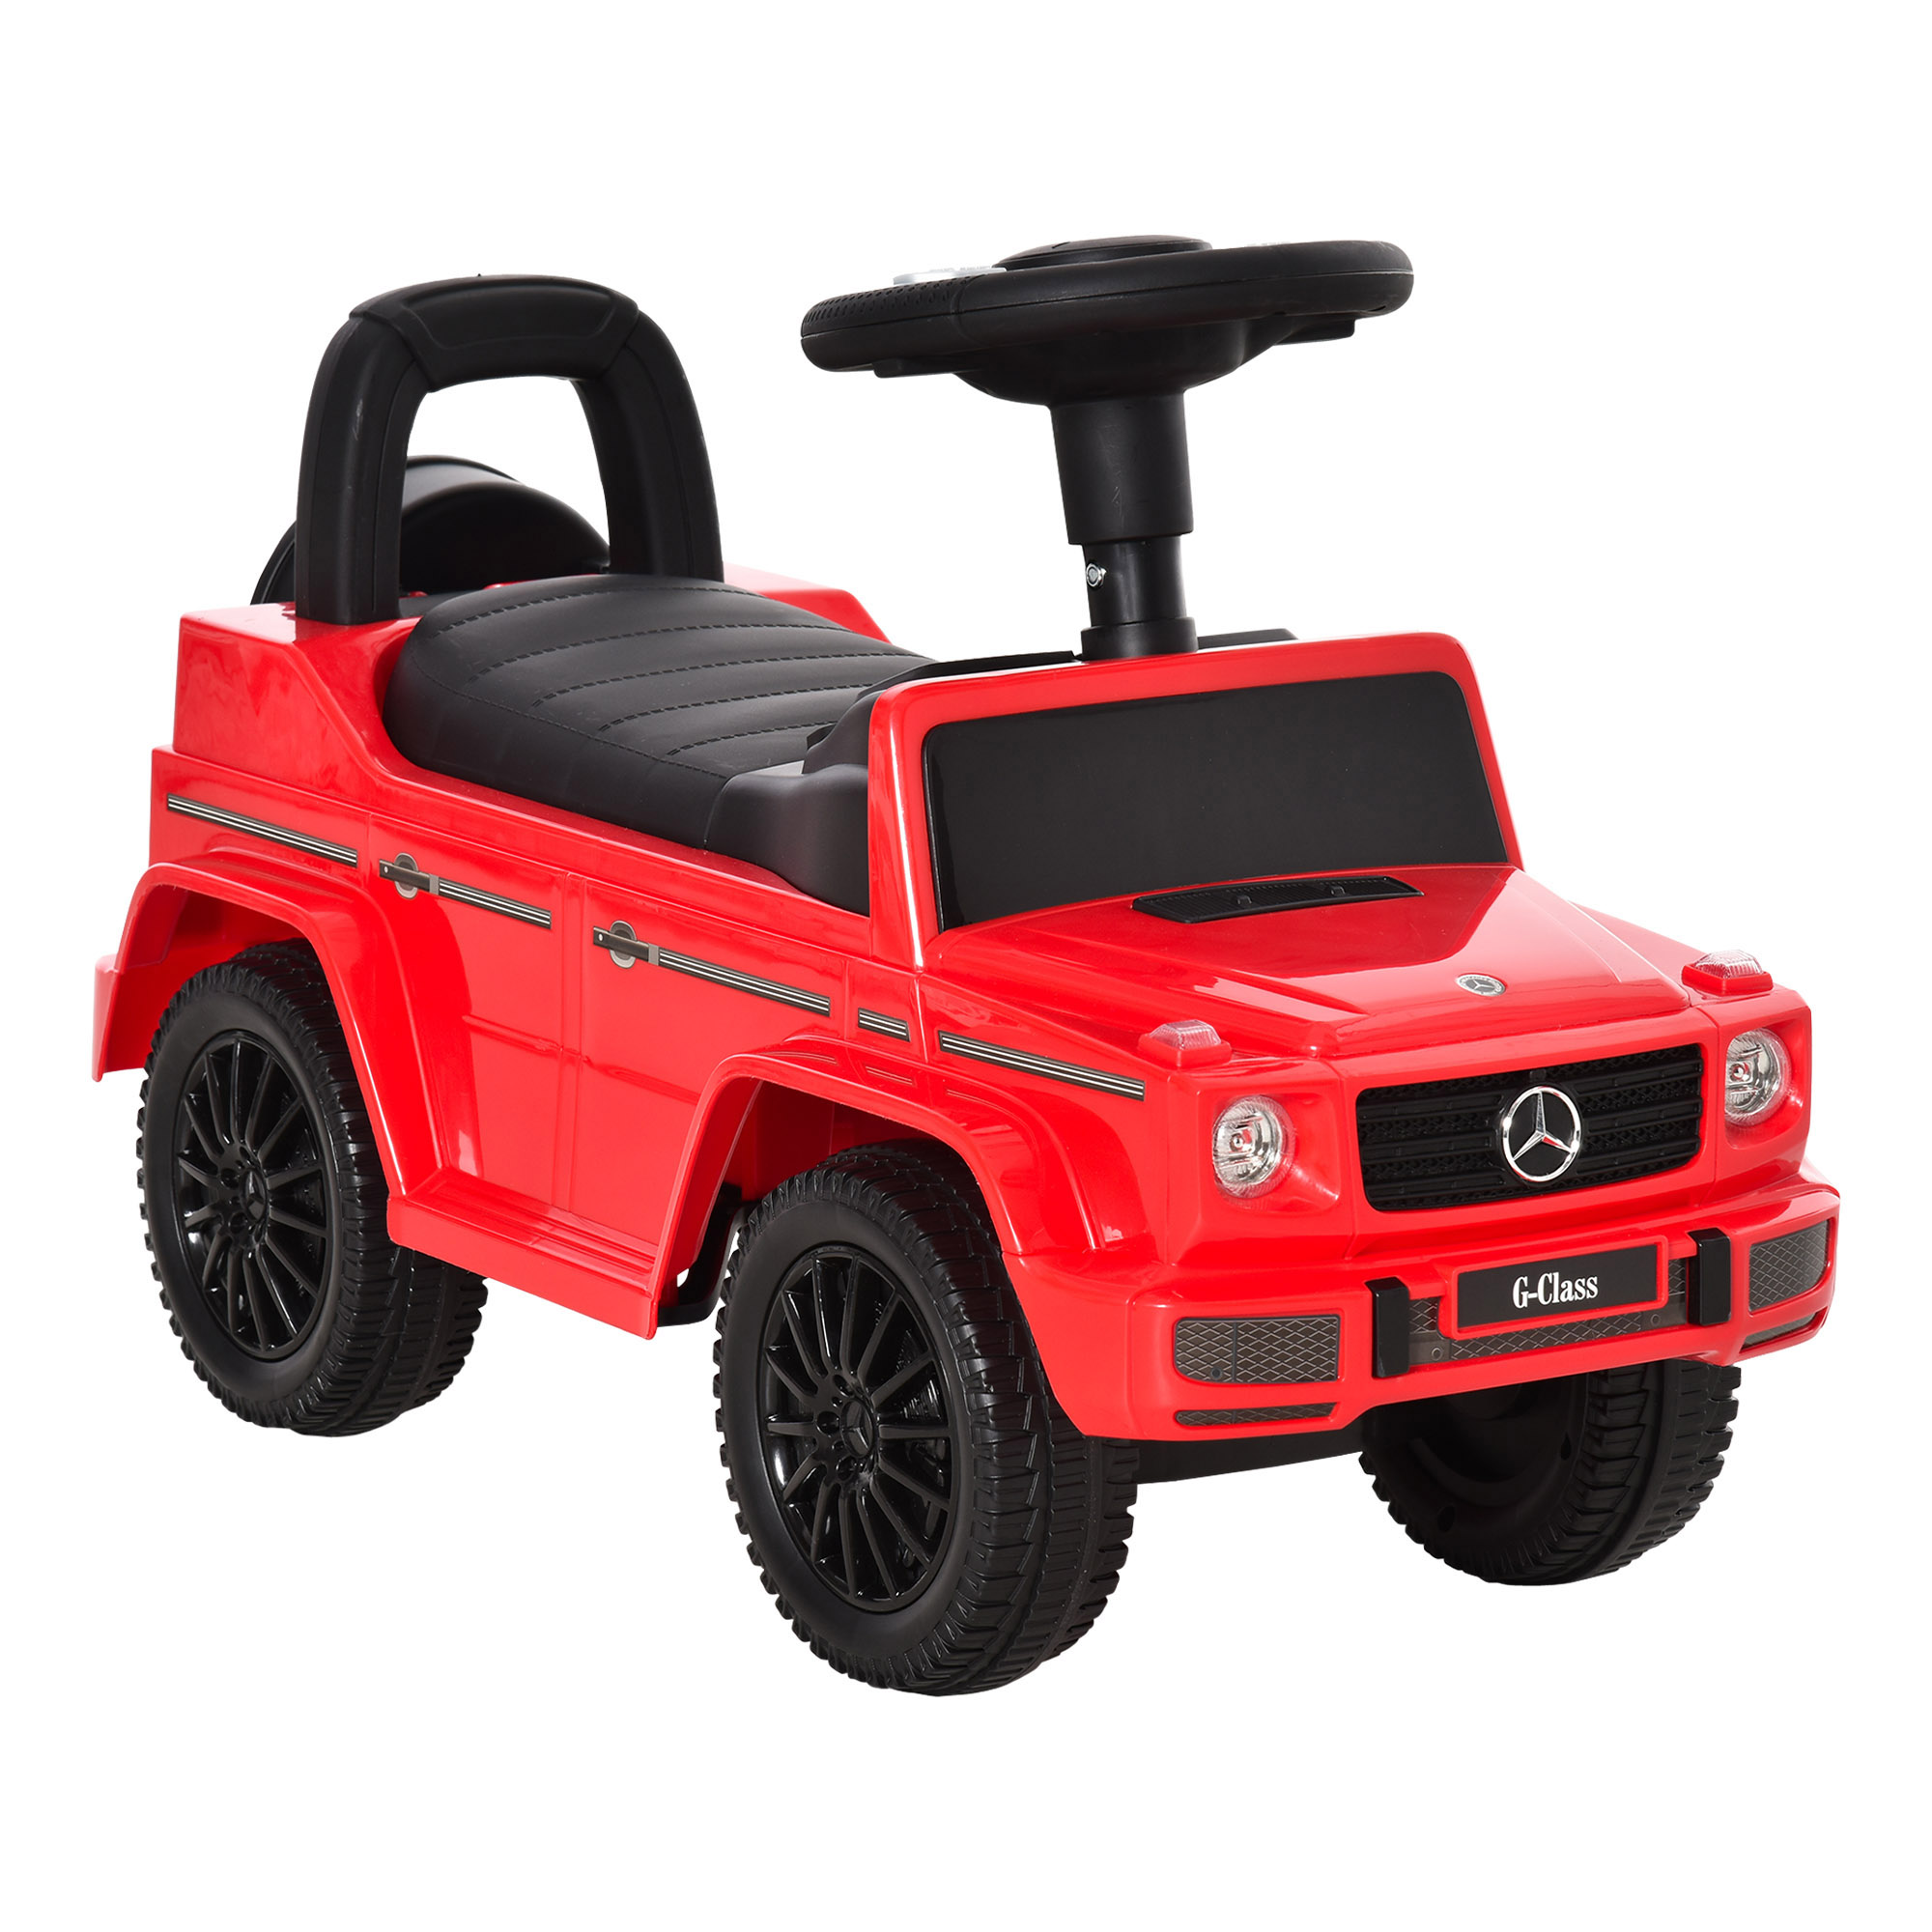 HOMCOM Push μοντέλο αυτοκινήτου Mercedes-Benz G350 για παιδιά 12-36 μηνών